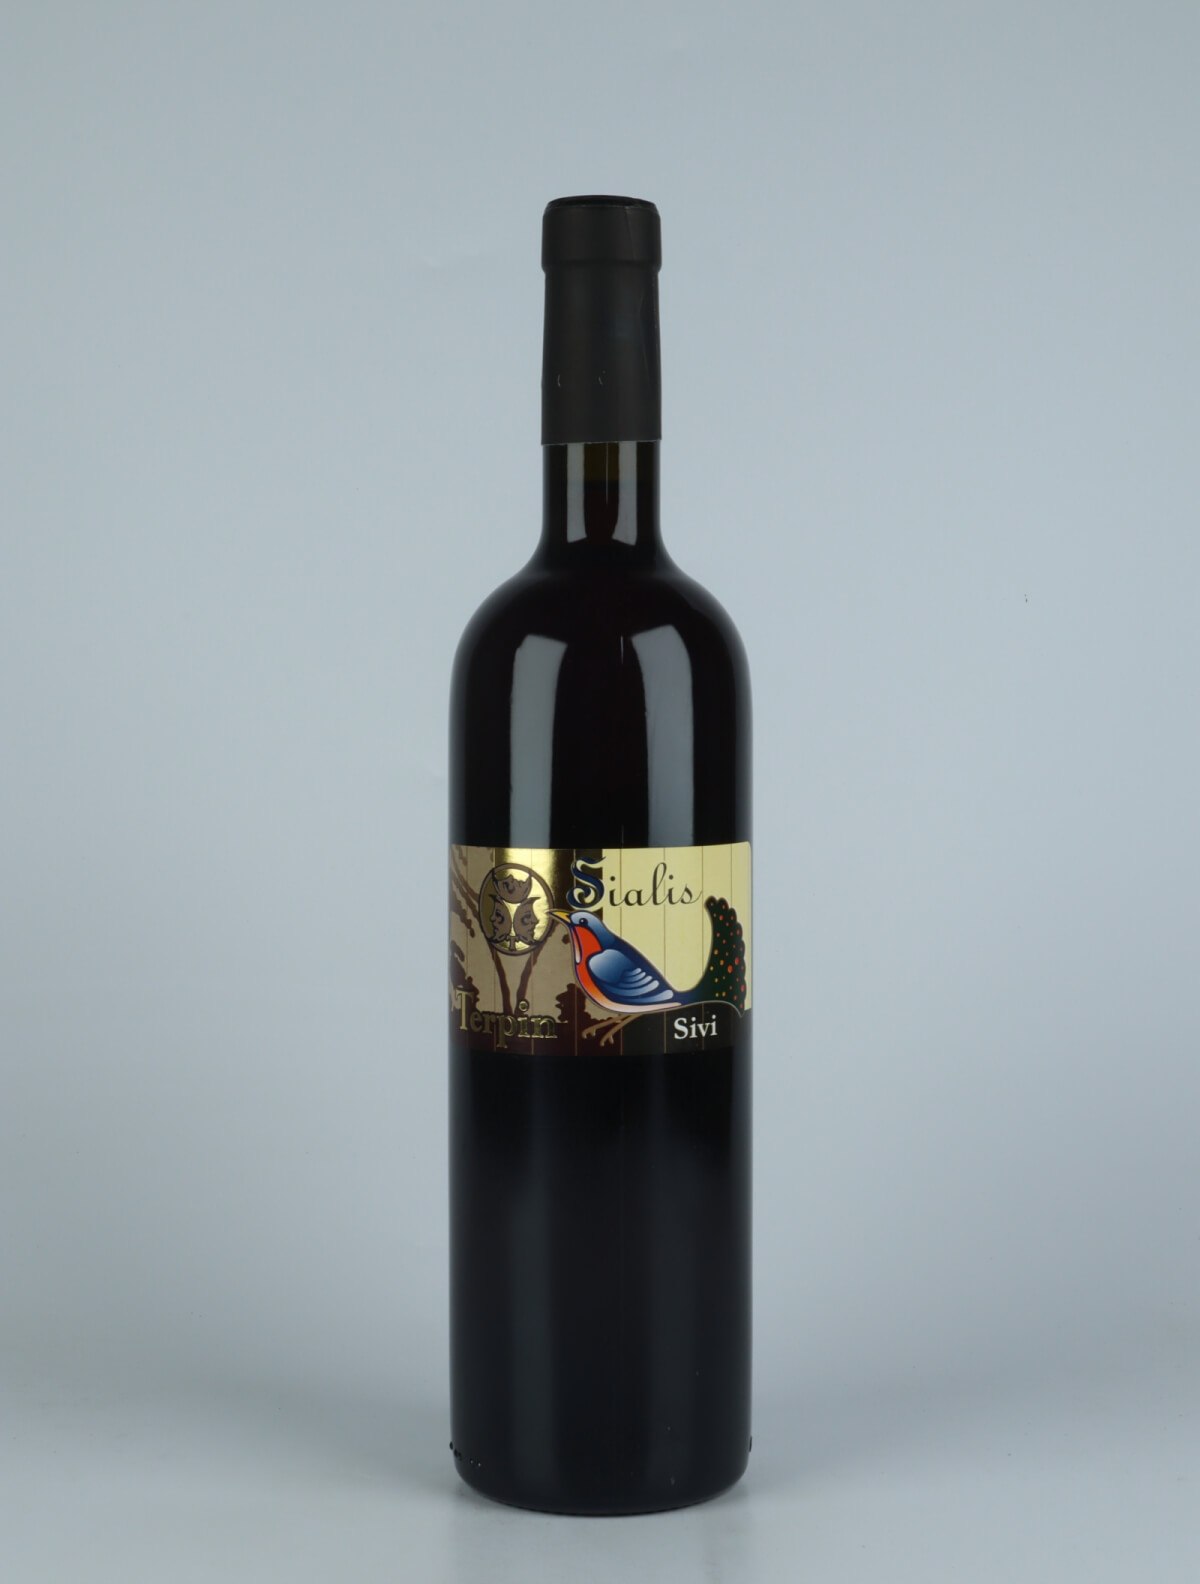 A bottle 2017 Sialis Bianco Sivi Orange wine from Franco Terpin, Friuli in Italy